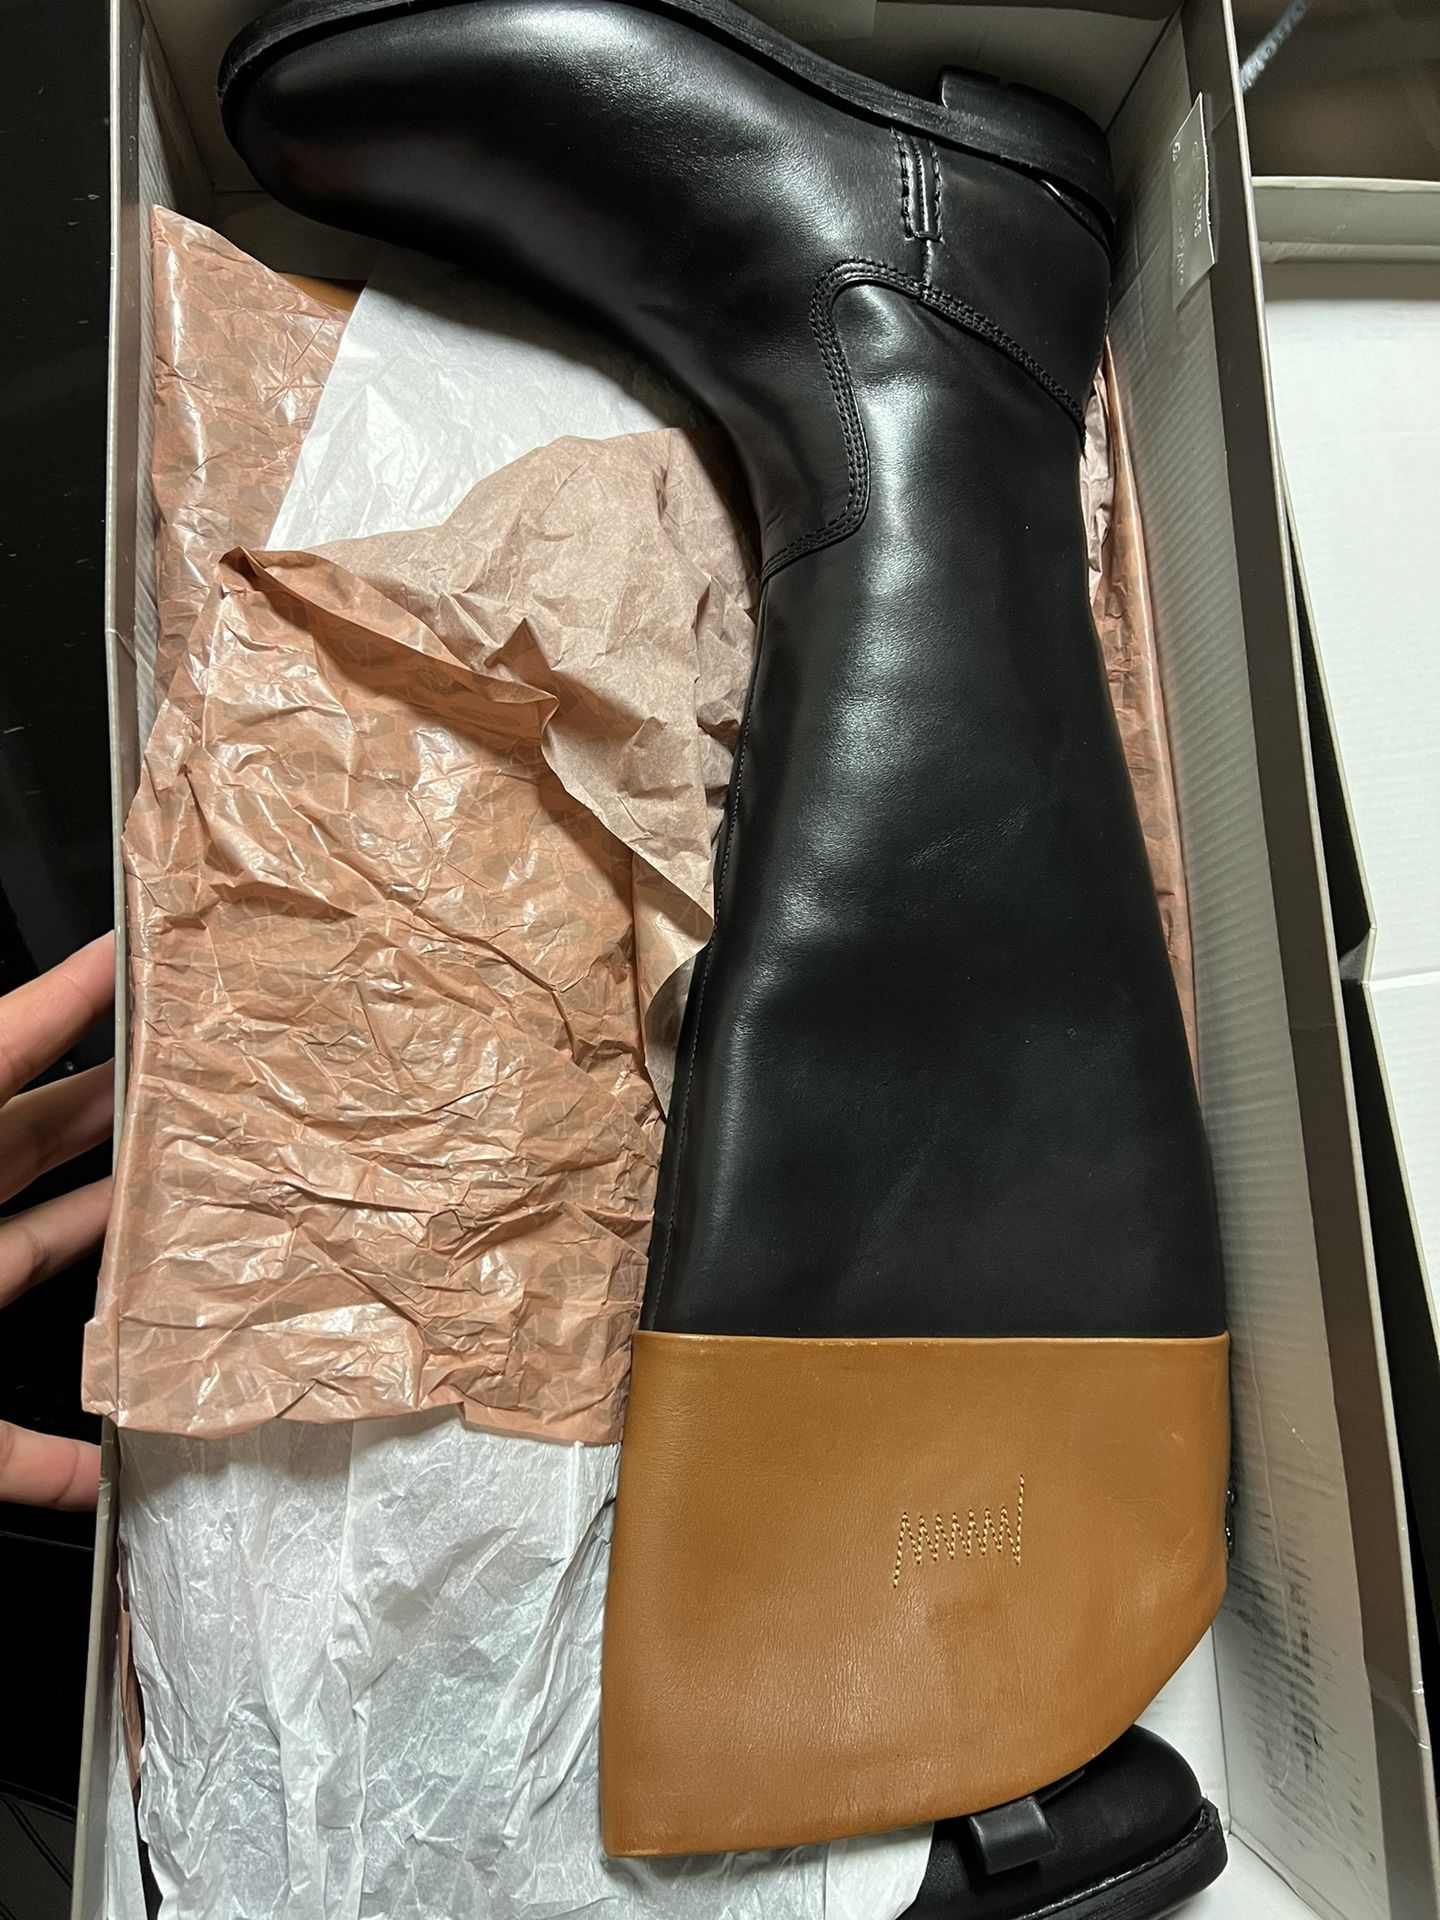 Franco Sarto Leather Boots